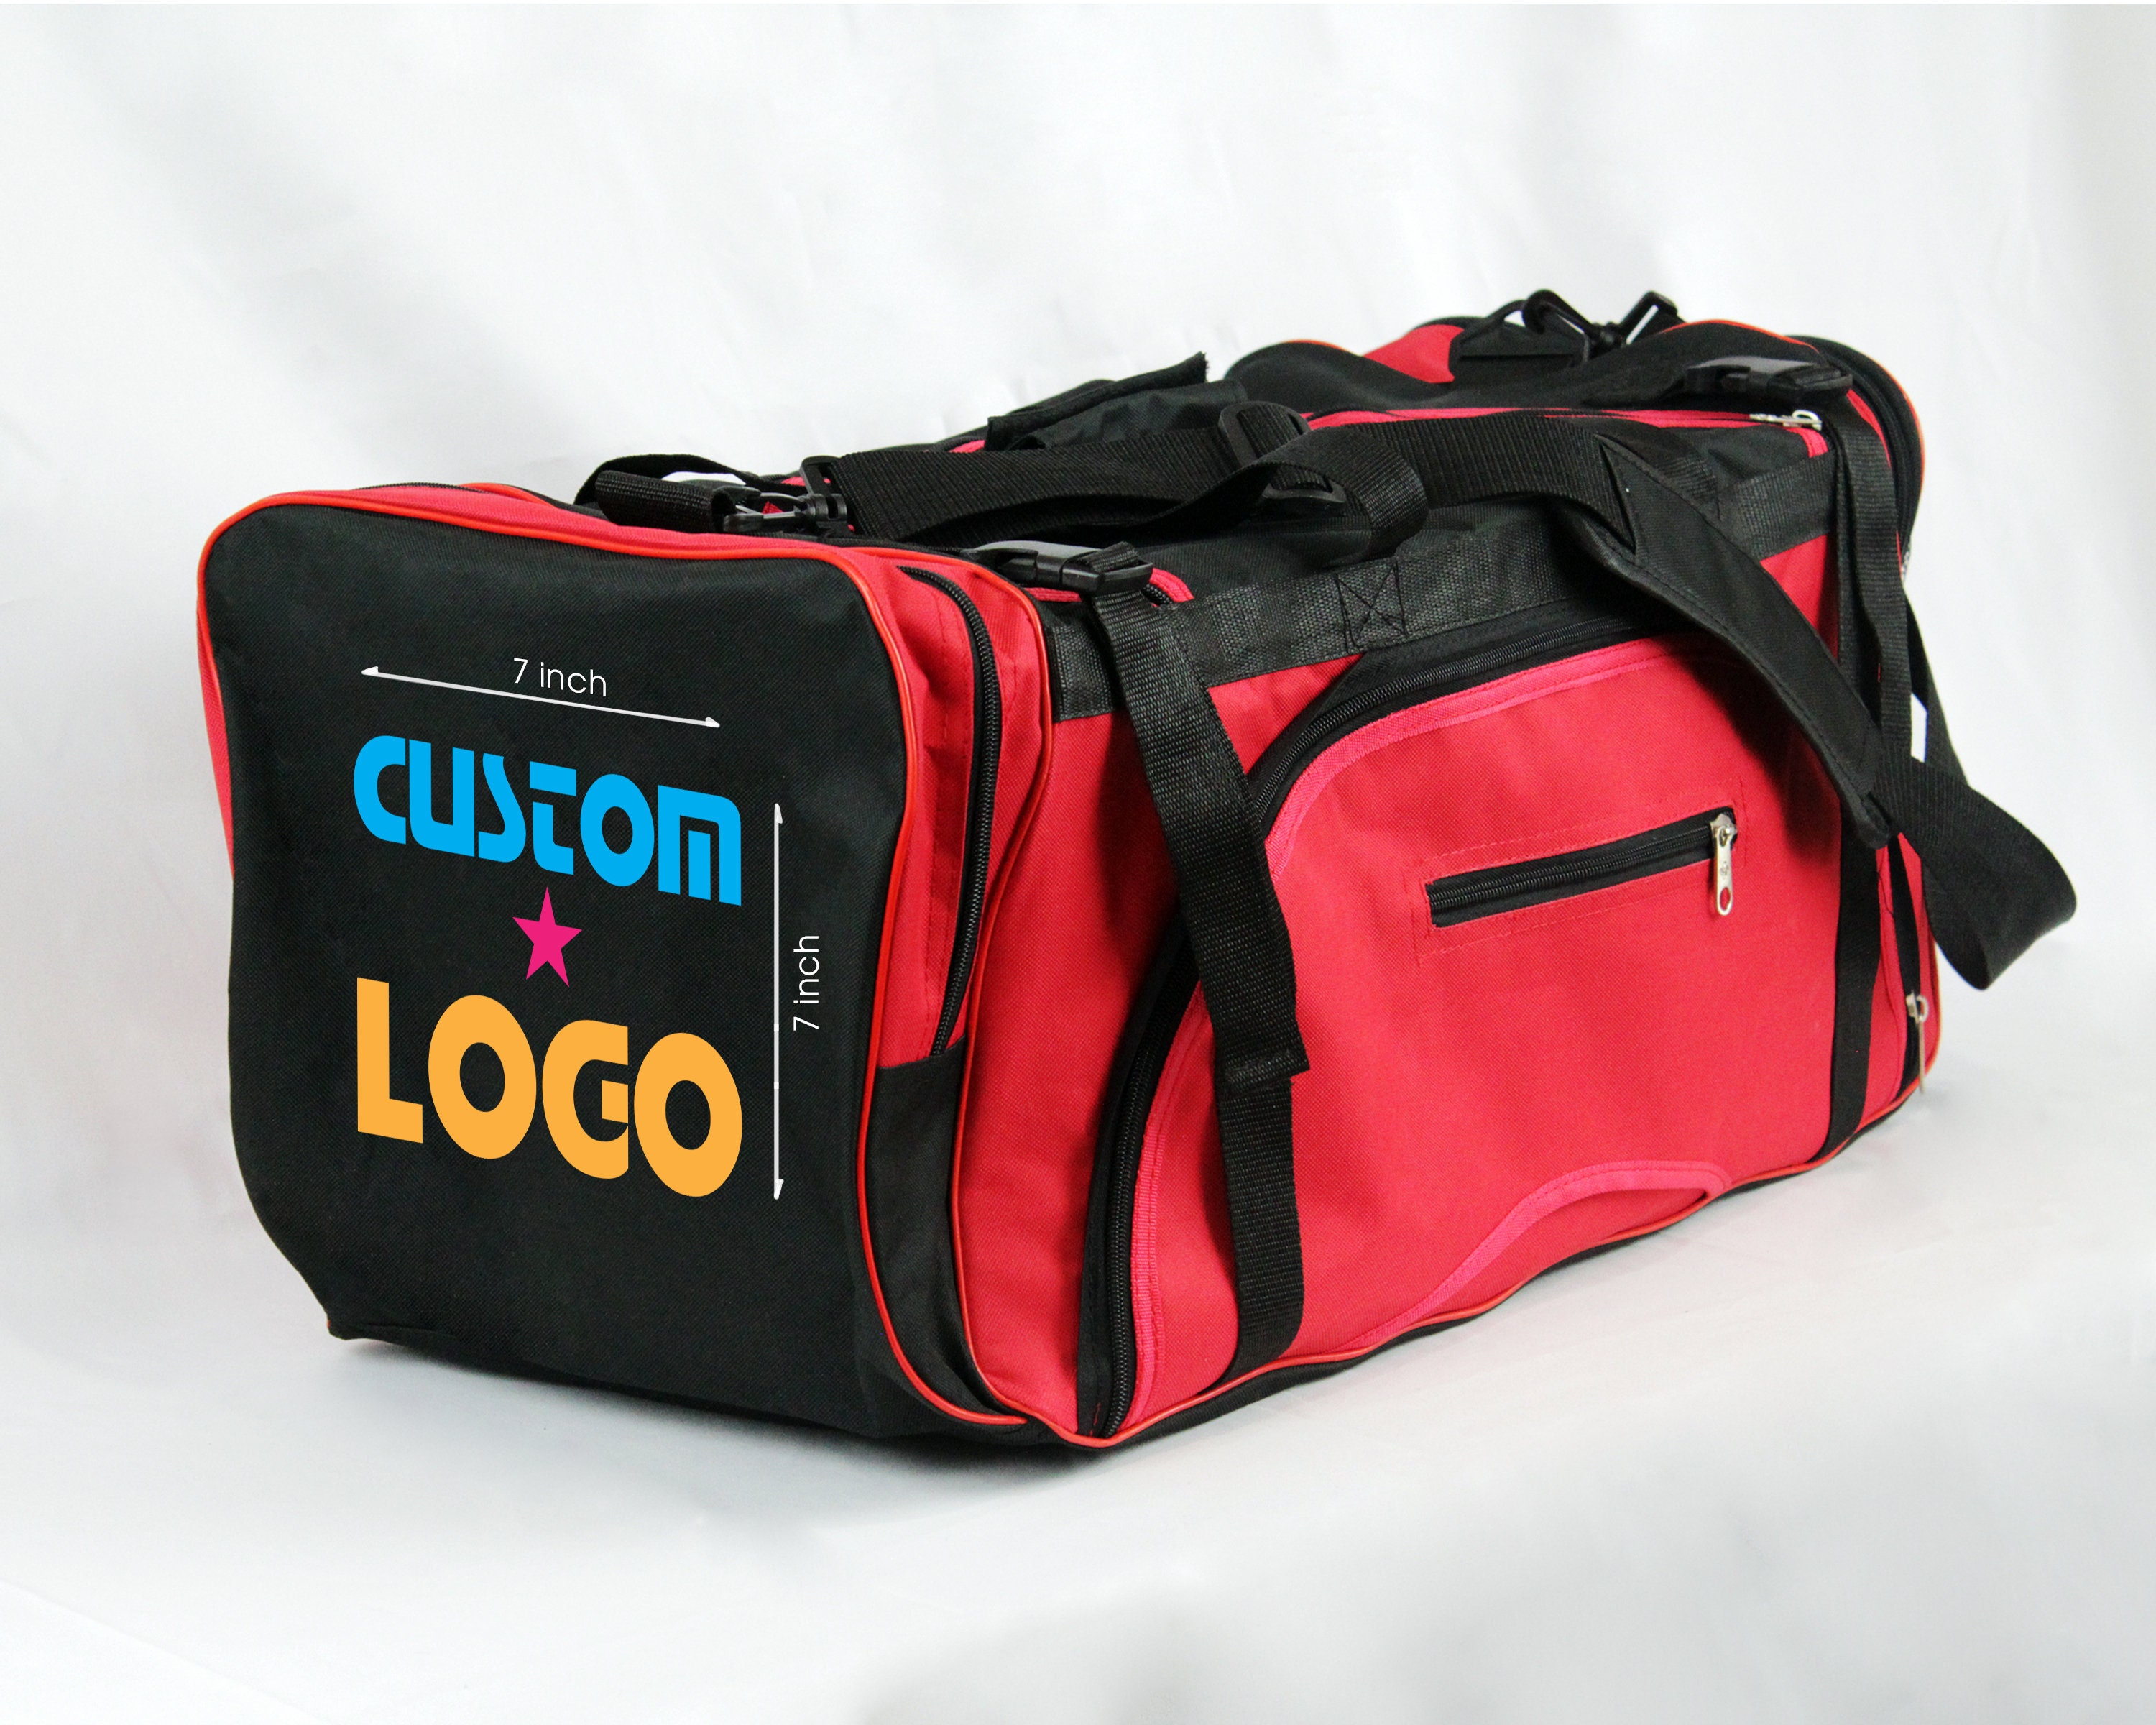 Keenso Taekwondo Bag 2 Colors Adults Portable Sanda Taekwondo Protectors Gear Tools Shoulders Bag Martial Arts Equipment Bags 